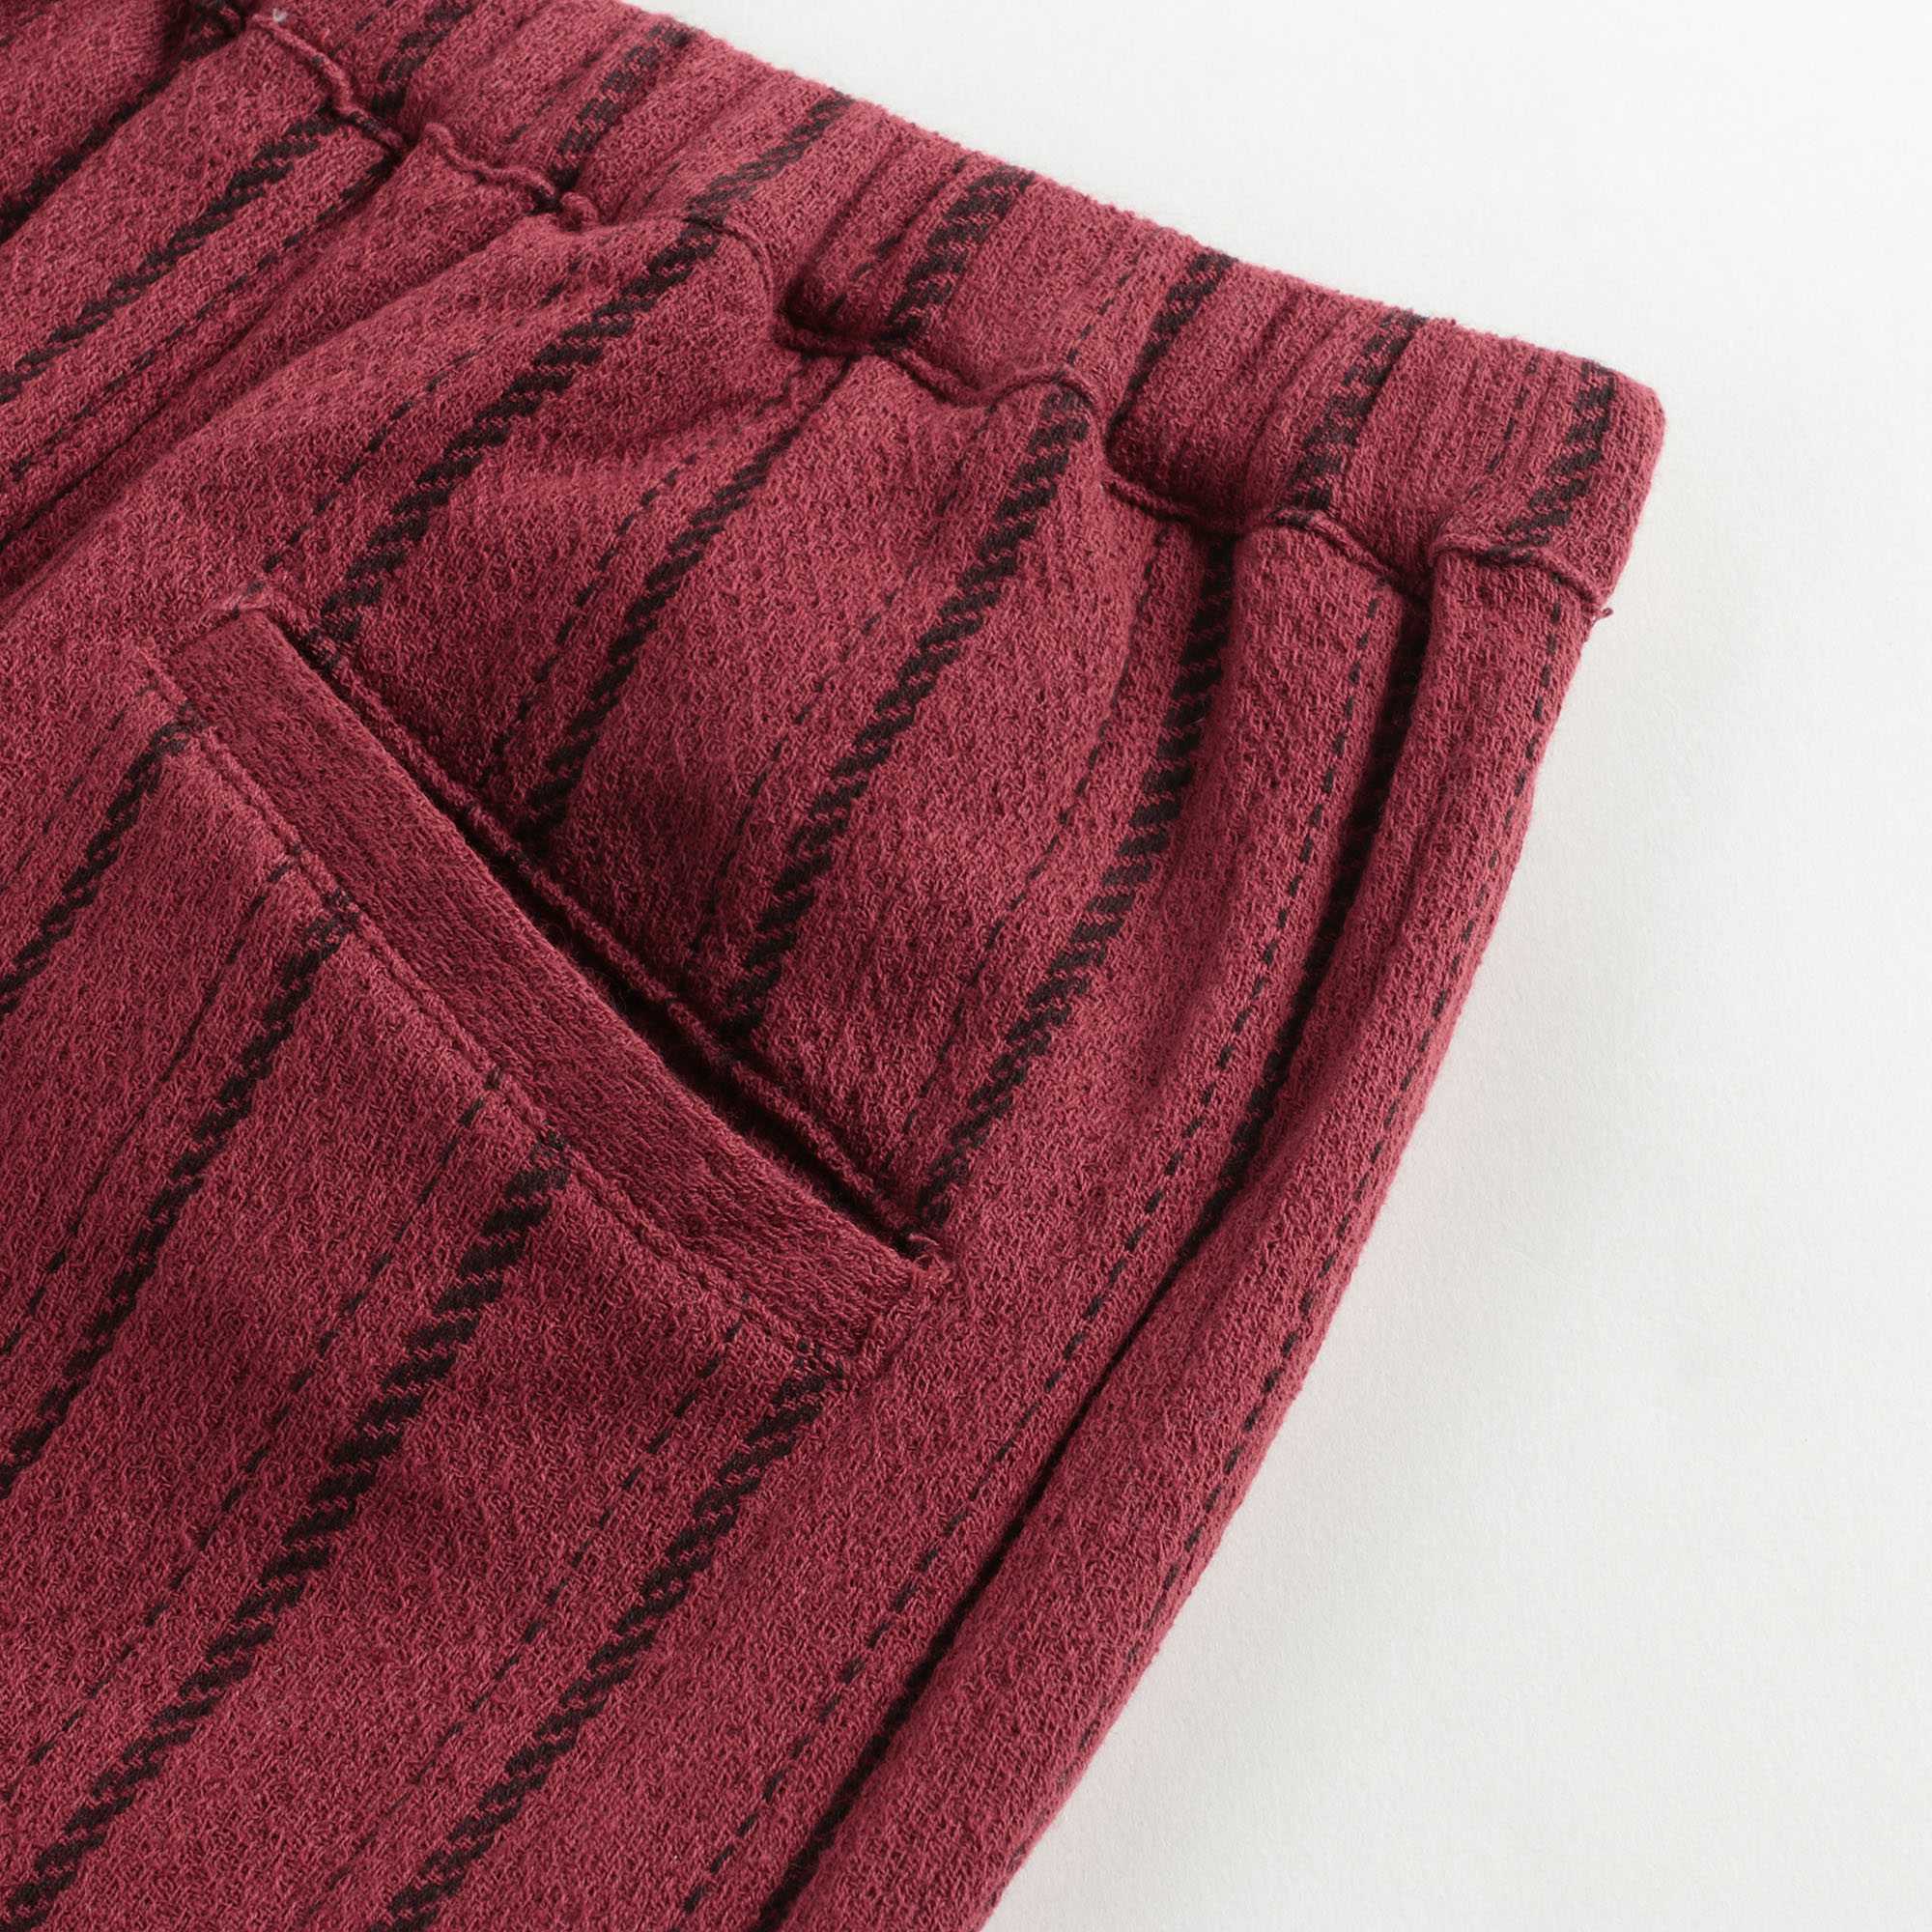 Girls Brick Red Stripe Cotton Trousers